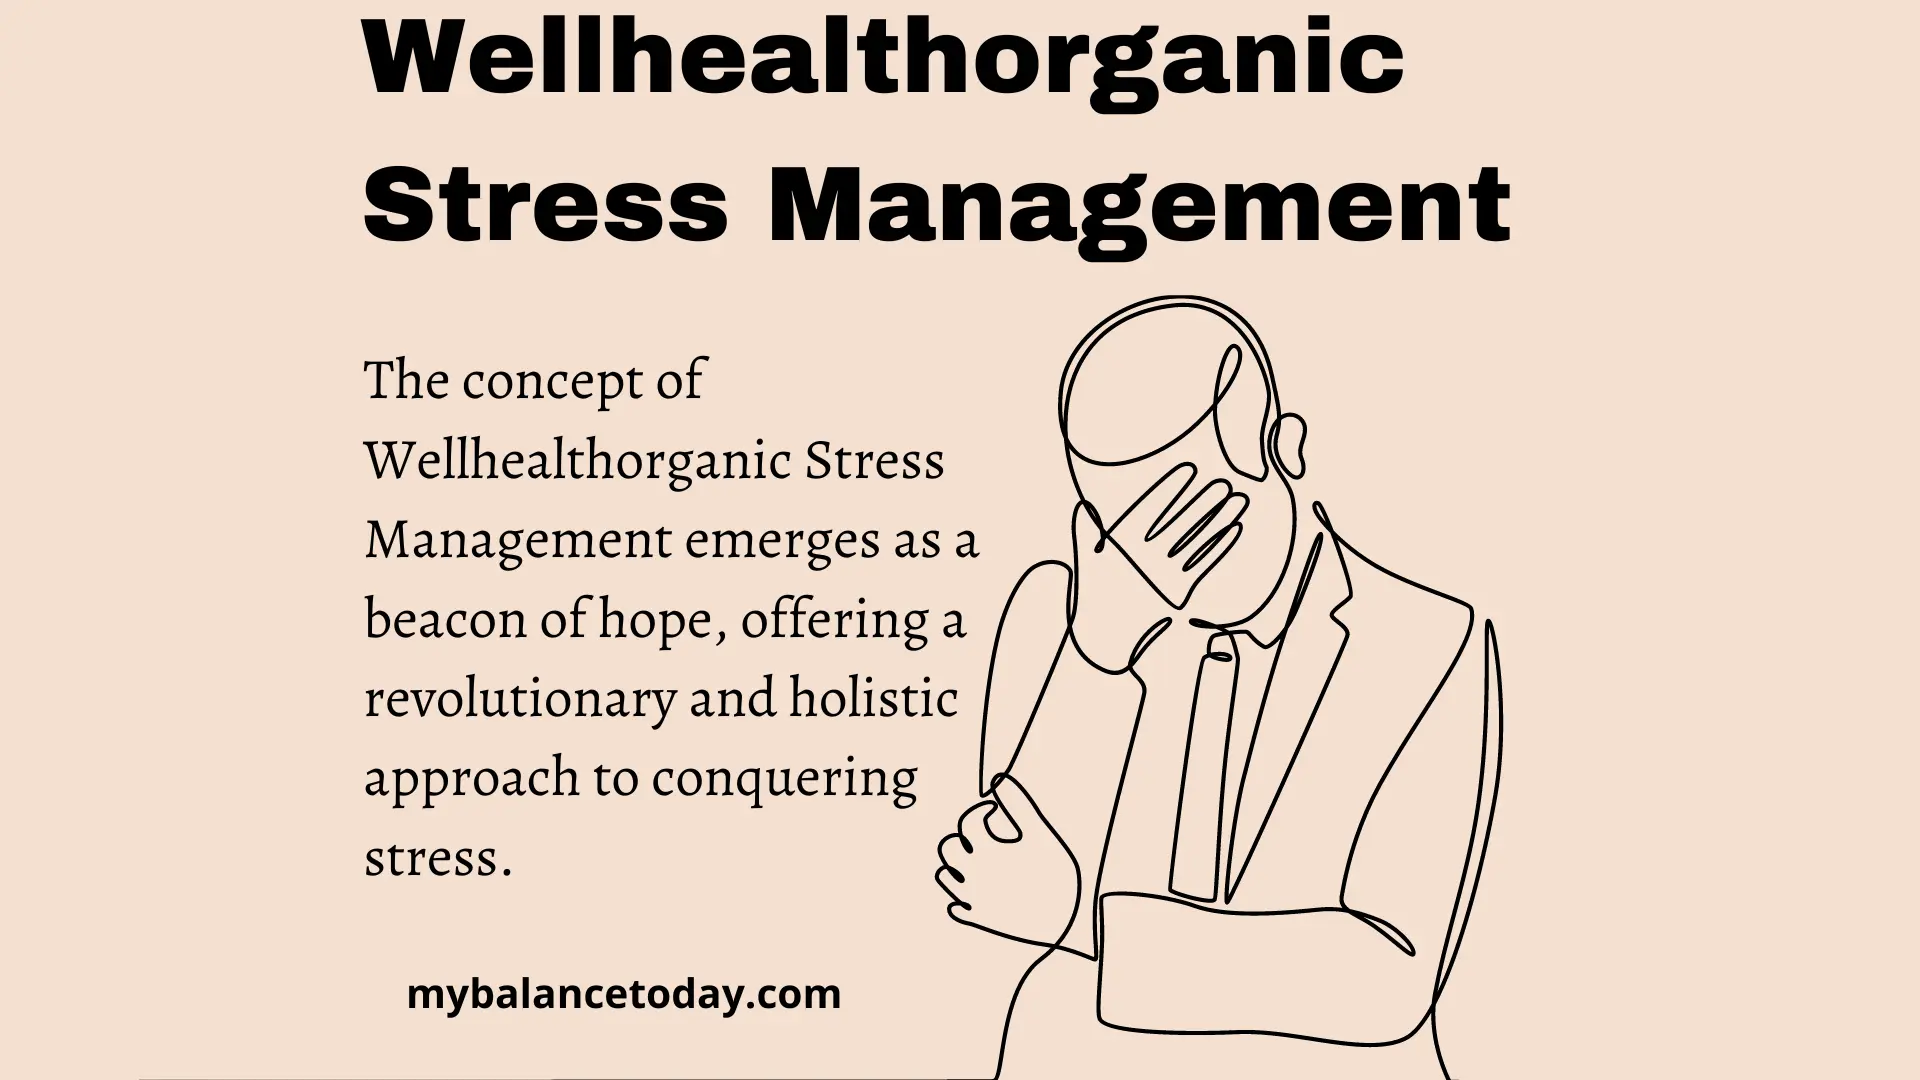 Wellhealthorganic Stress Management: Journey to Wellness